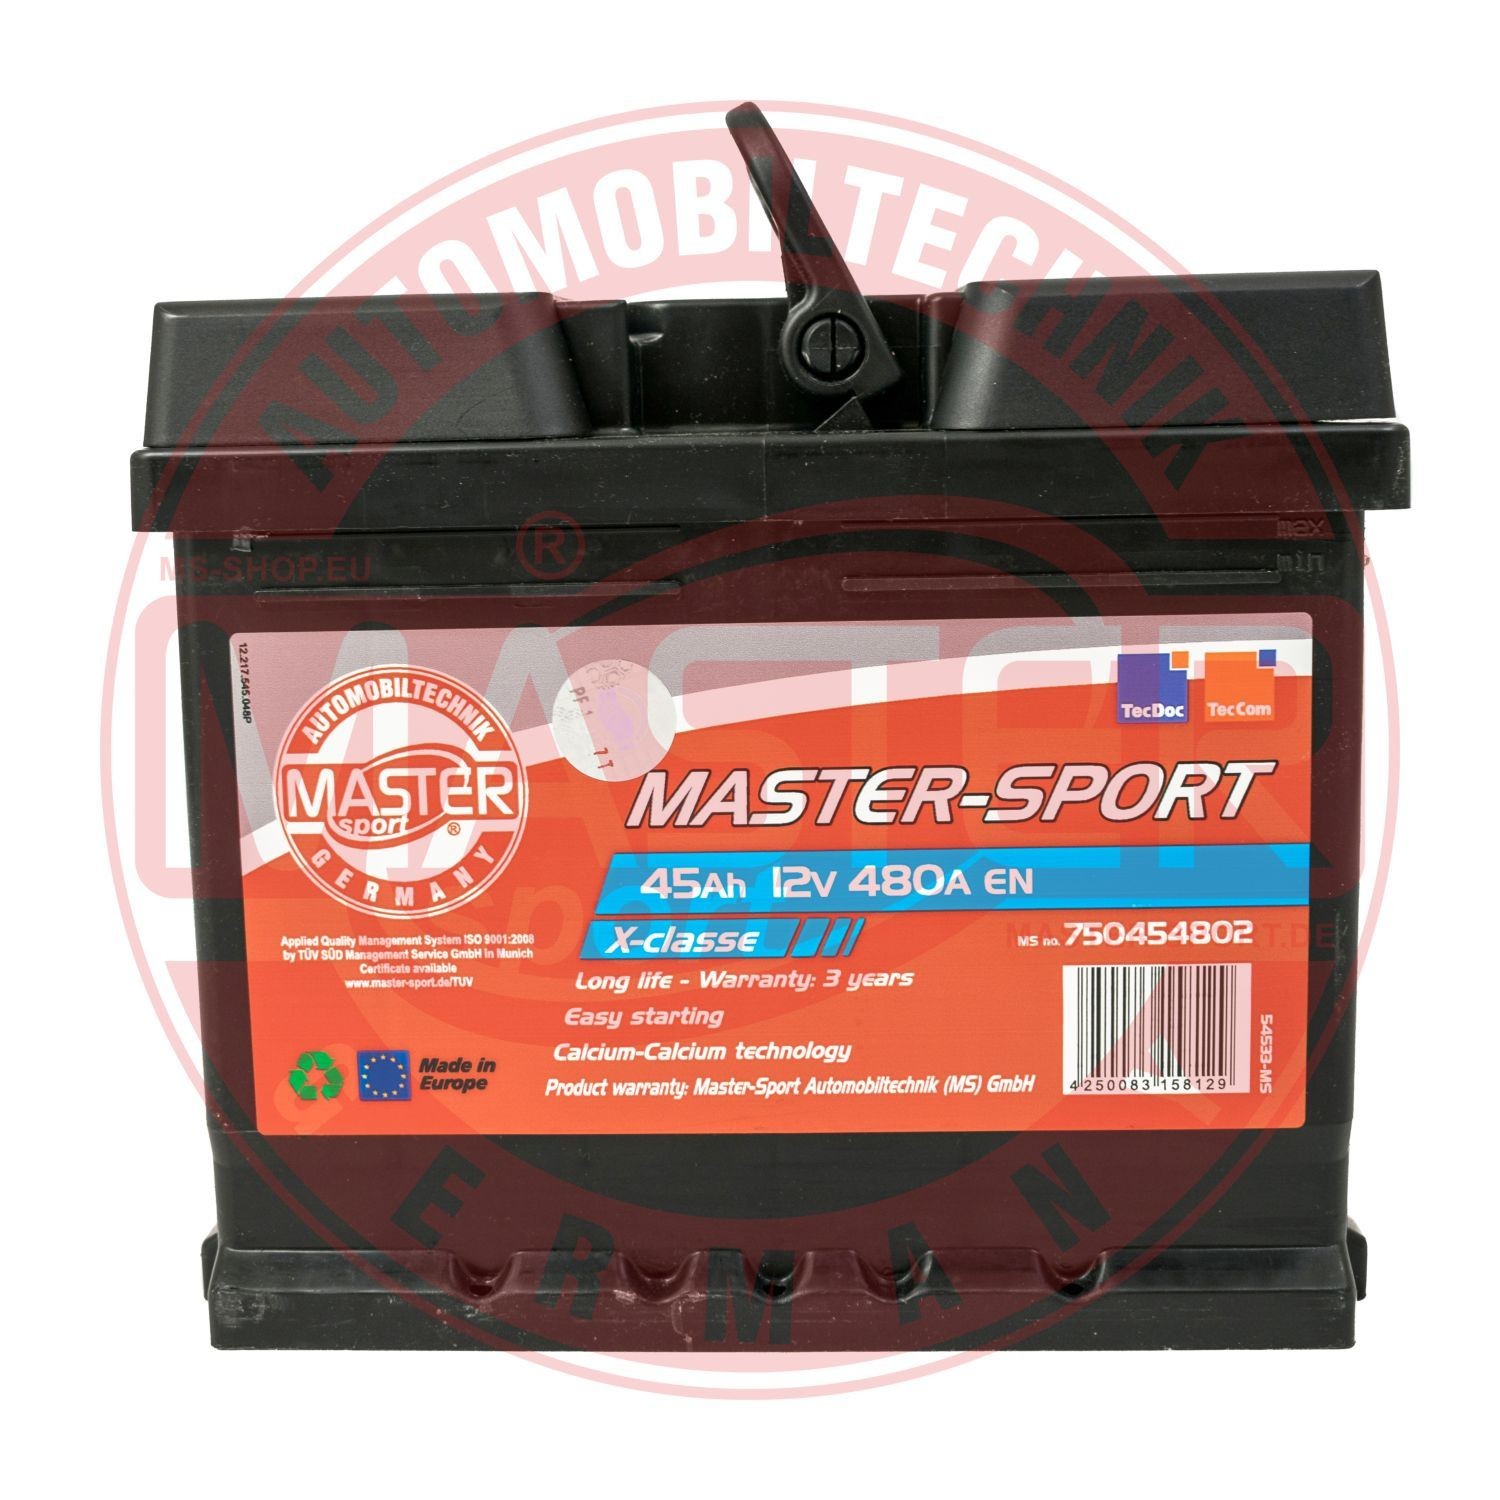 780454802 MASTER-SPORT Car battery Opel ZAFIRA review